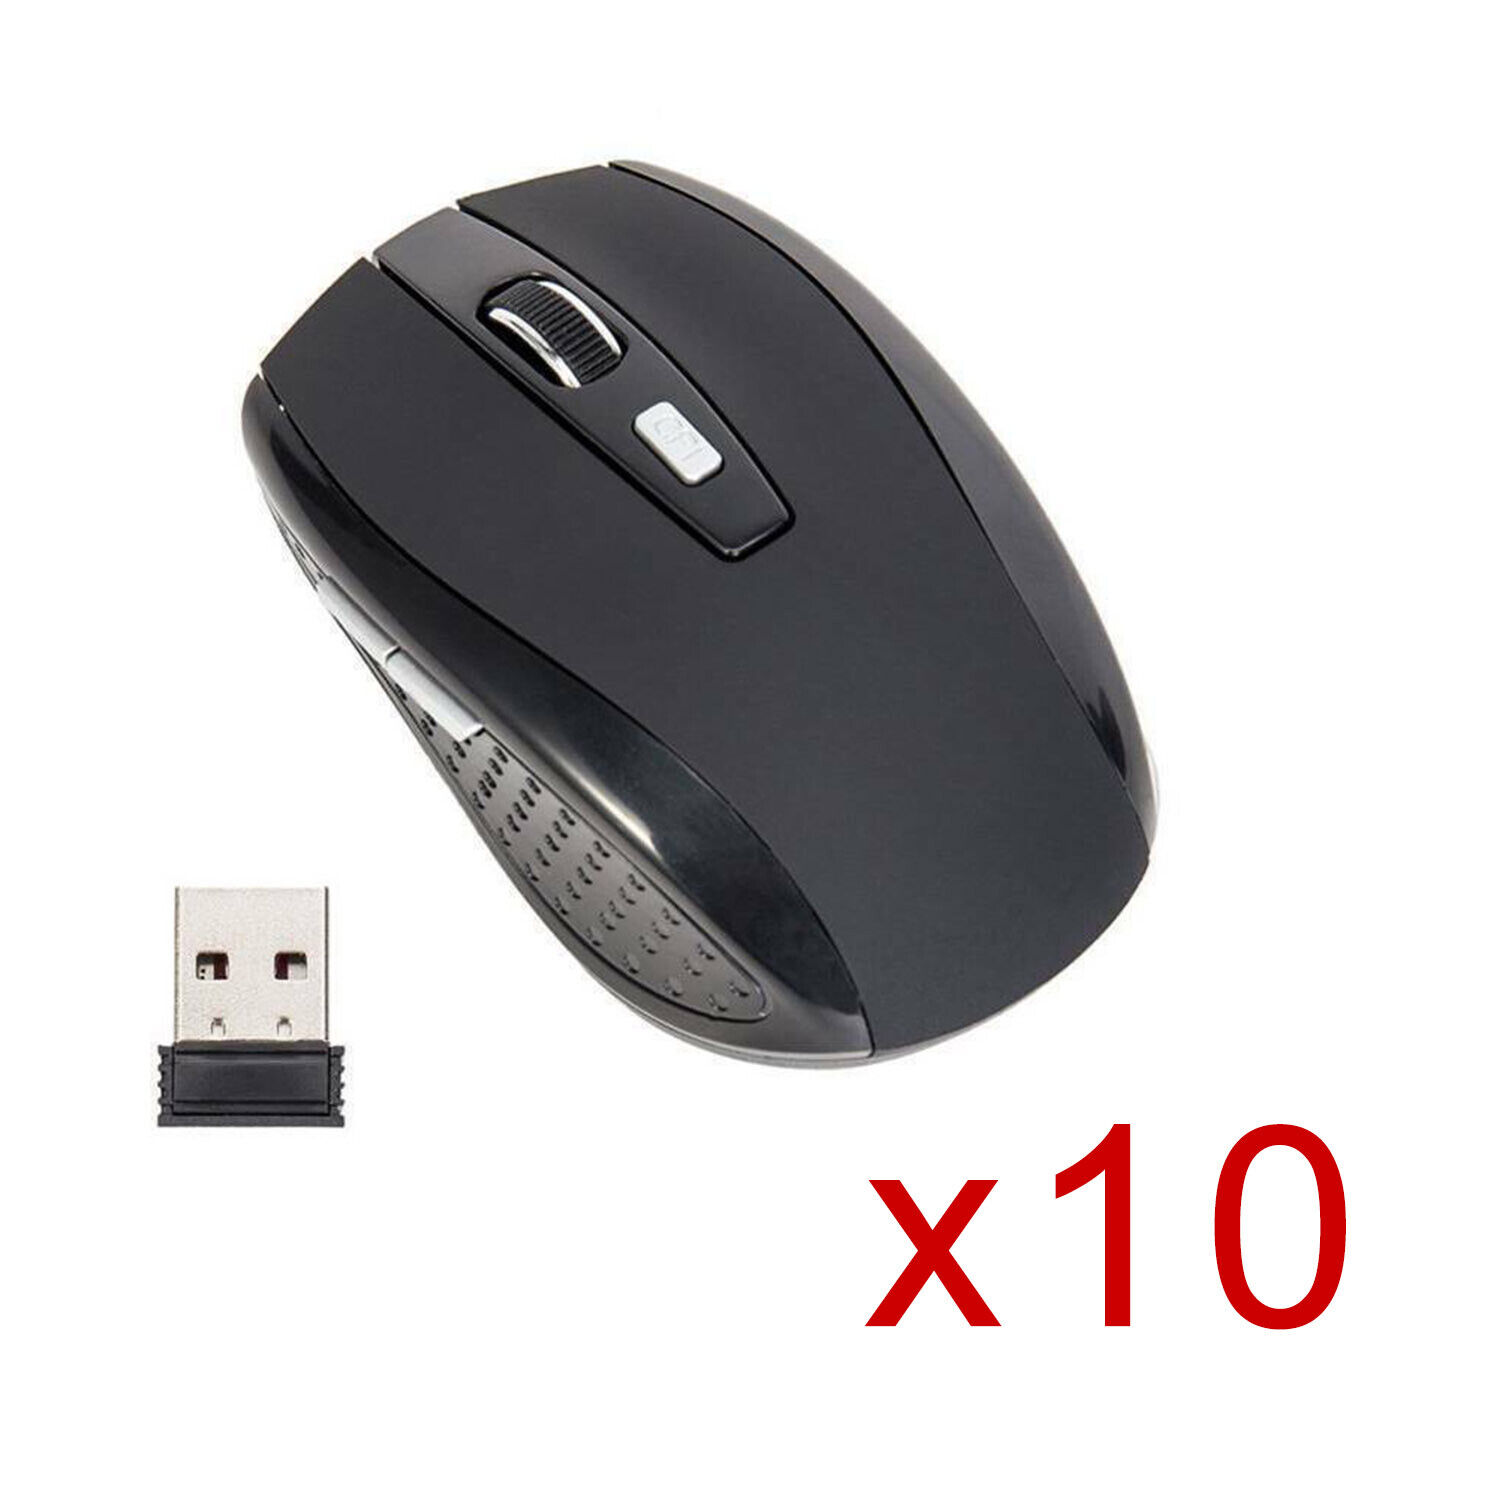 Bulk sale Lot of 10 2.4GHz Wireless Cordless Optical Mouse Mice USB PC Laptop